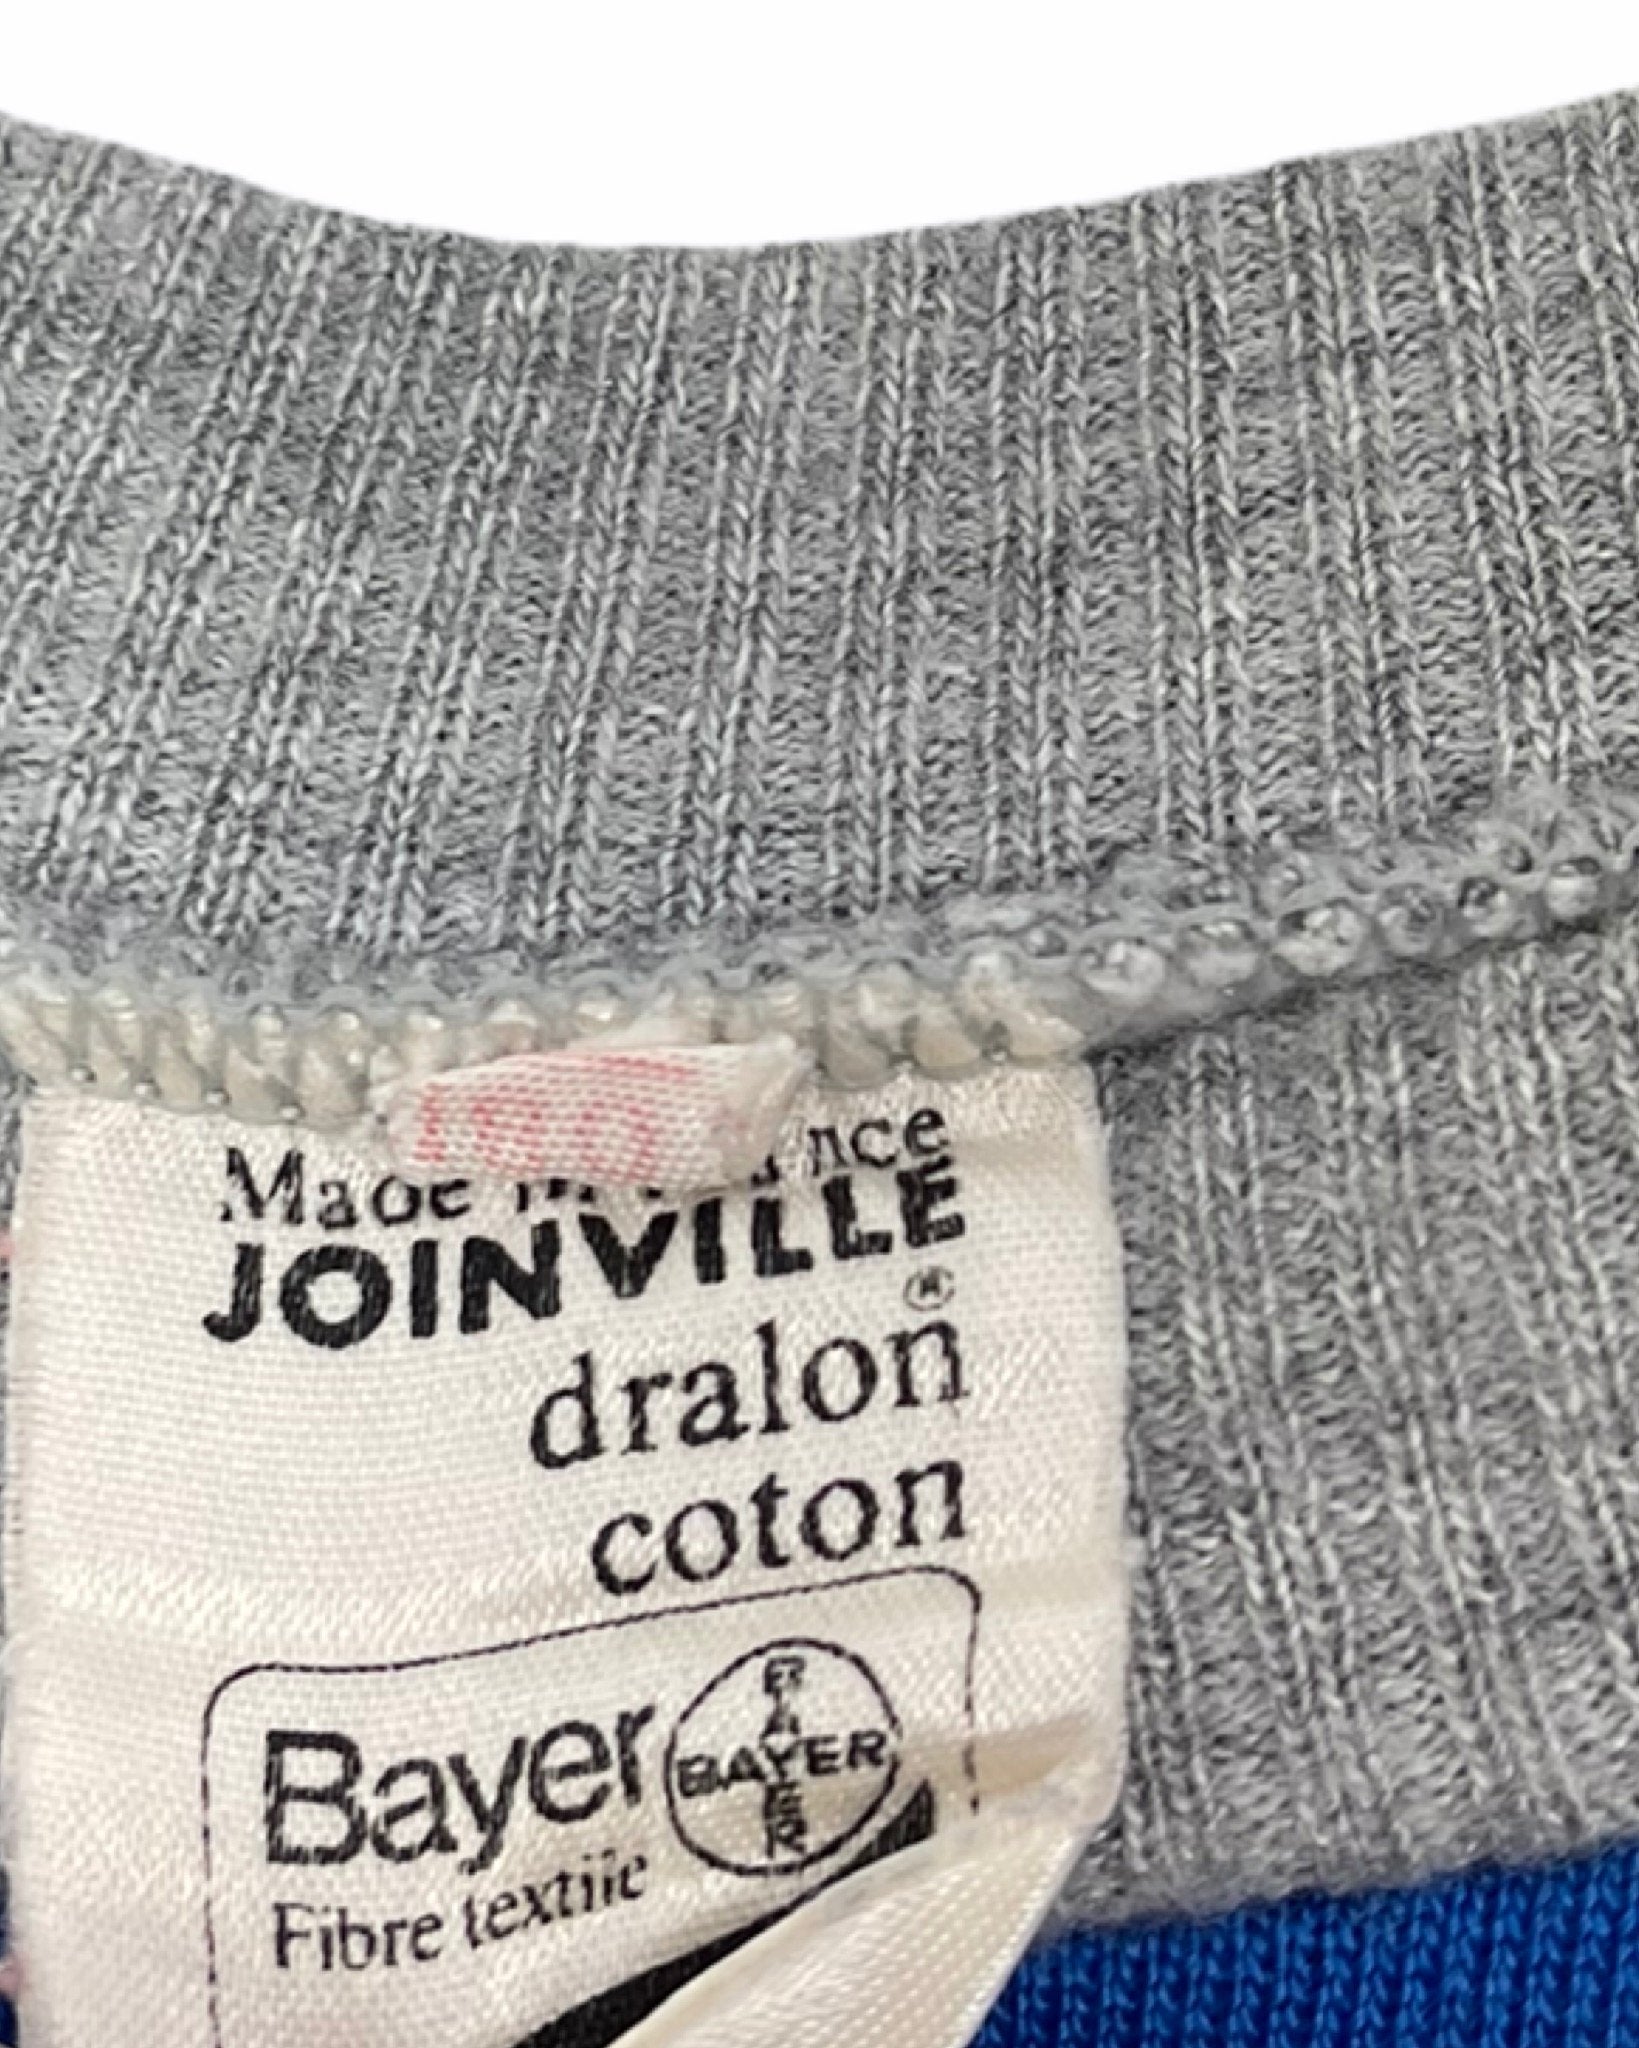  Sweatshirt Vintage Sweat - Joinville - M - PLOMOSTORE